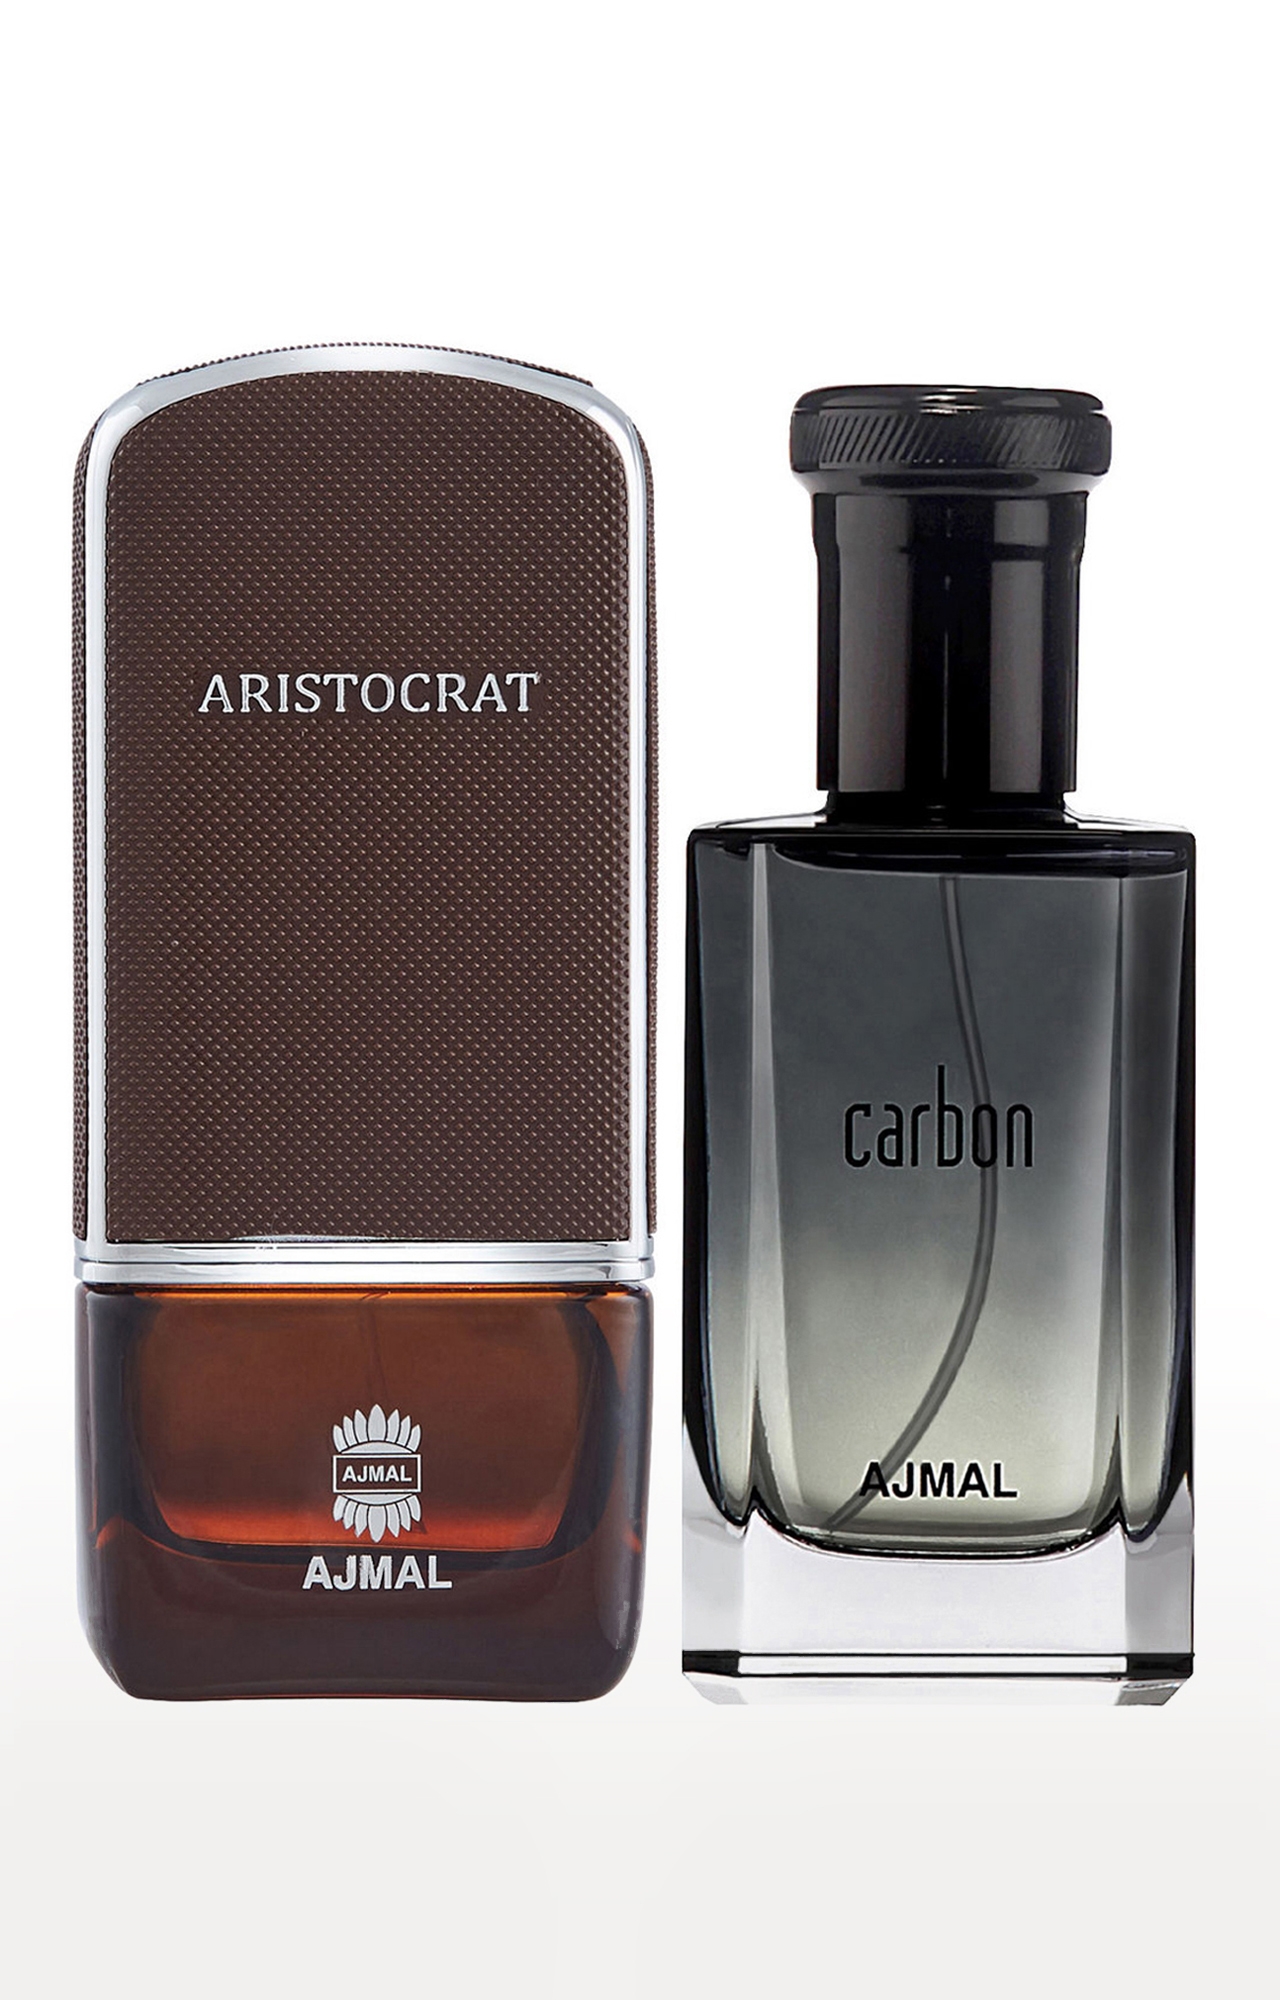 Ajmal Aristocrat EDP Perfume 75ml for Men and Carbon EDP Perfume 100ml for Men